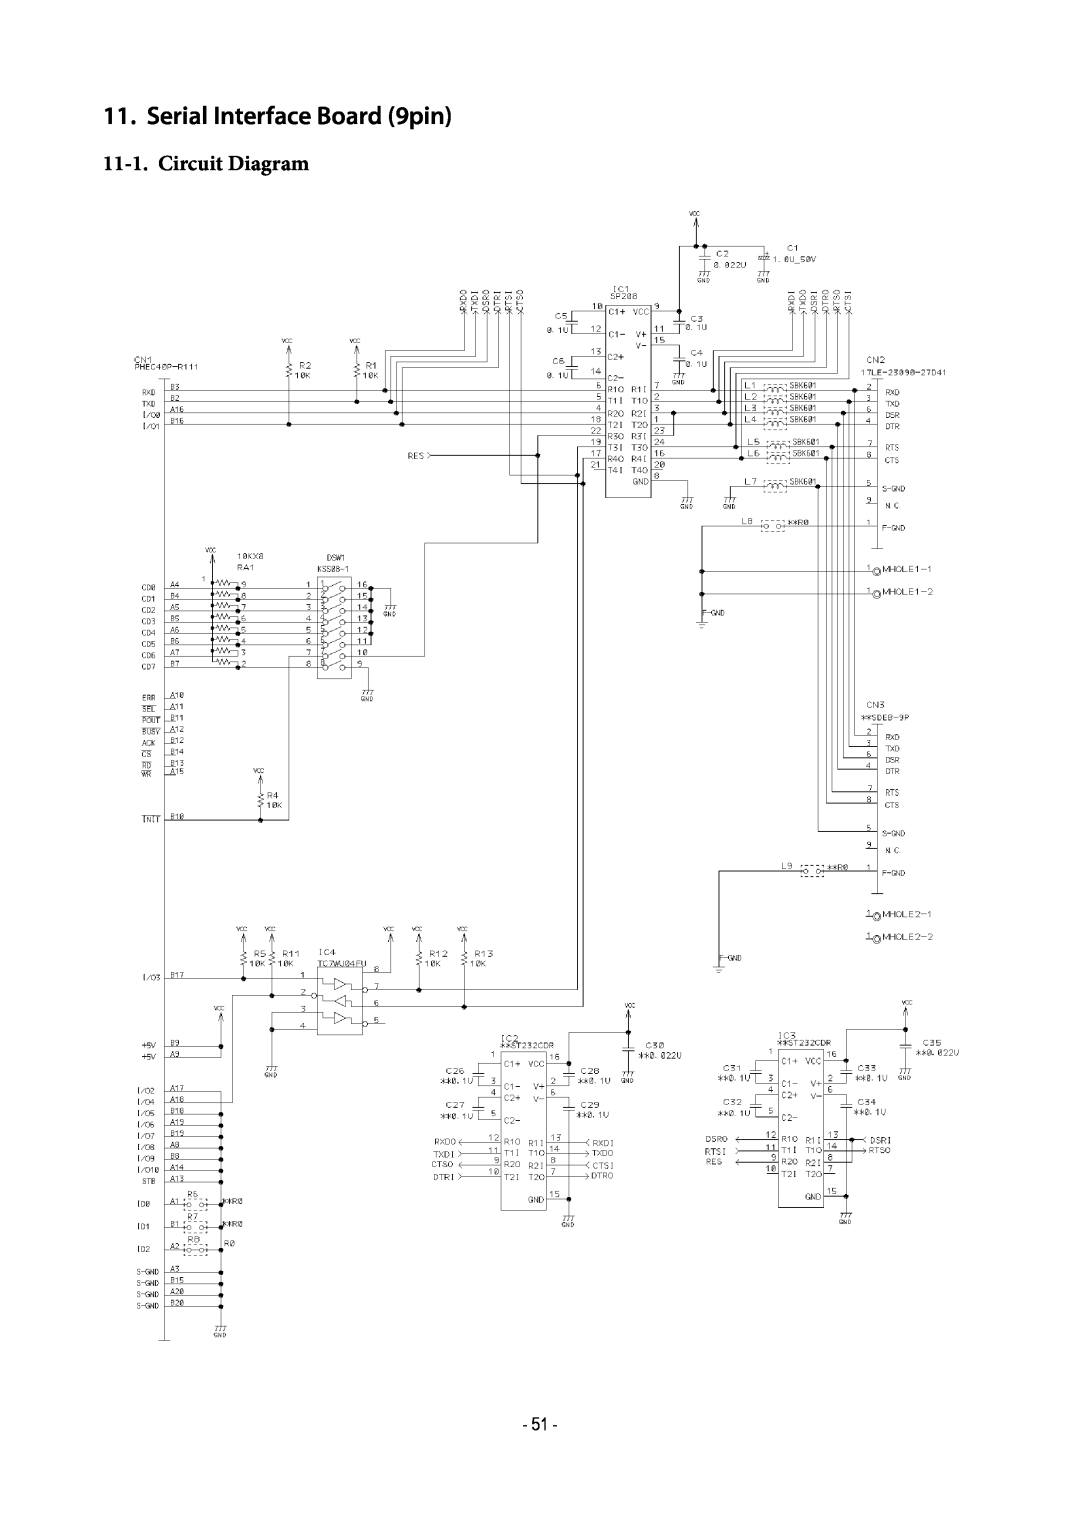 Star Micronics TUP500 technical manual Serial Interface Board 9pin, Circuit Diagram 